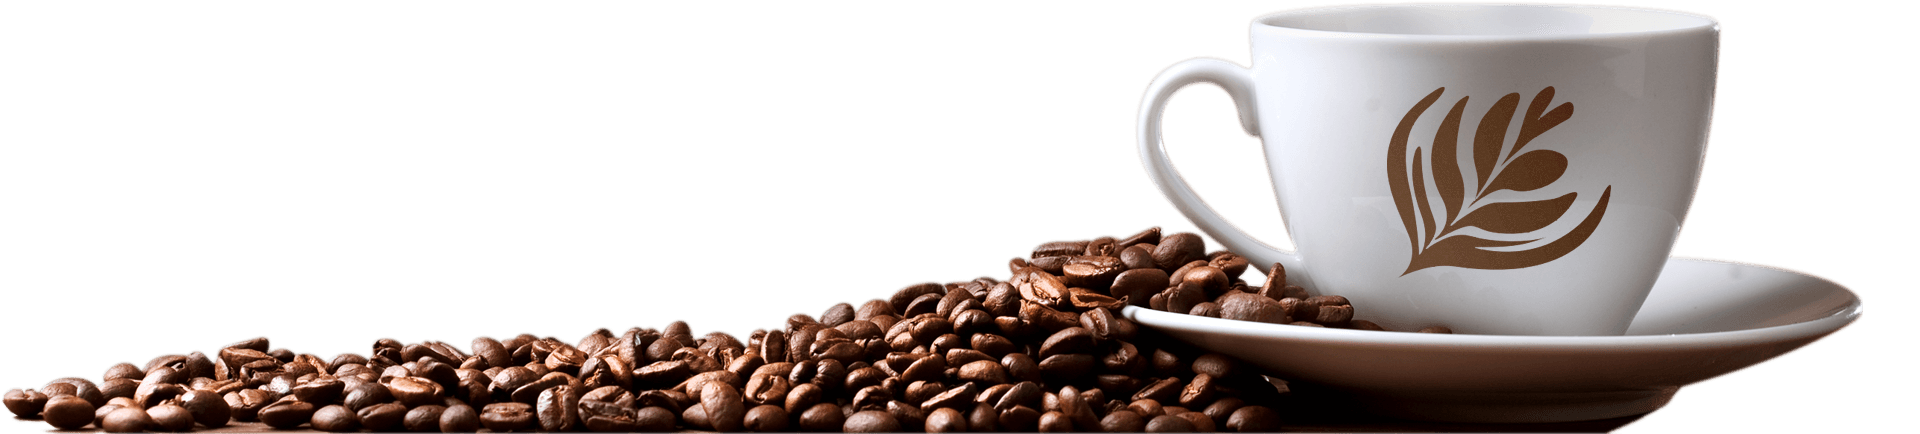 Coffee Instant Tea Espresso Latte Mug Beans PNG Image